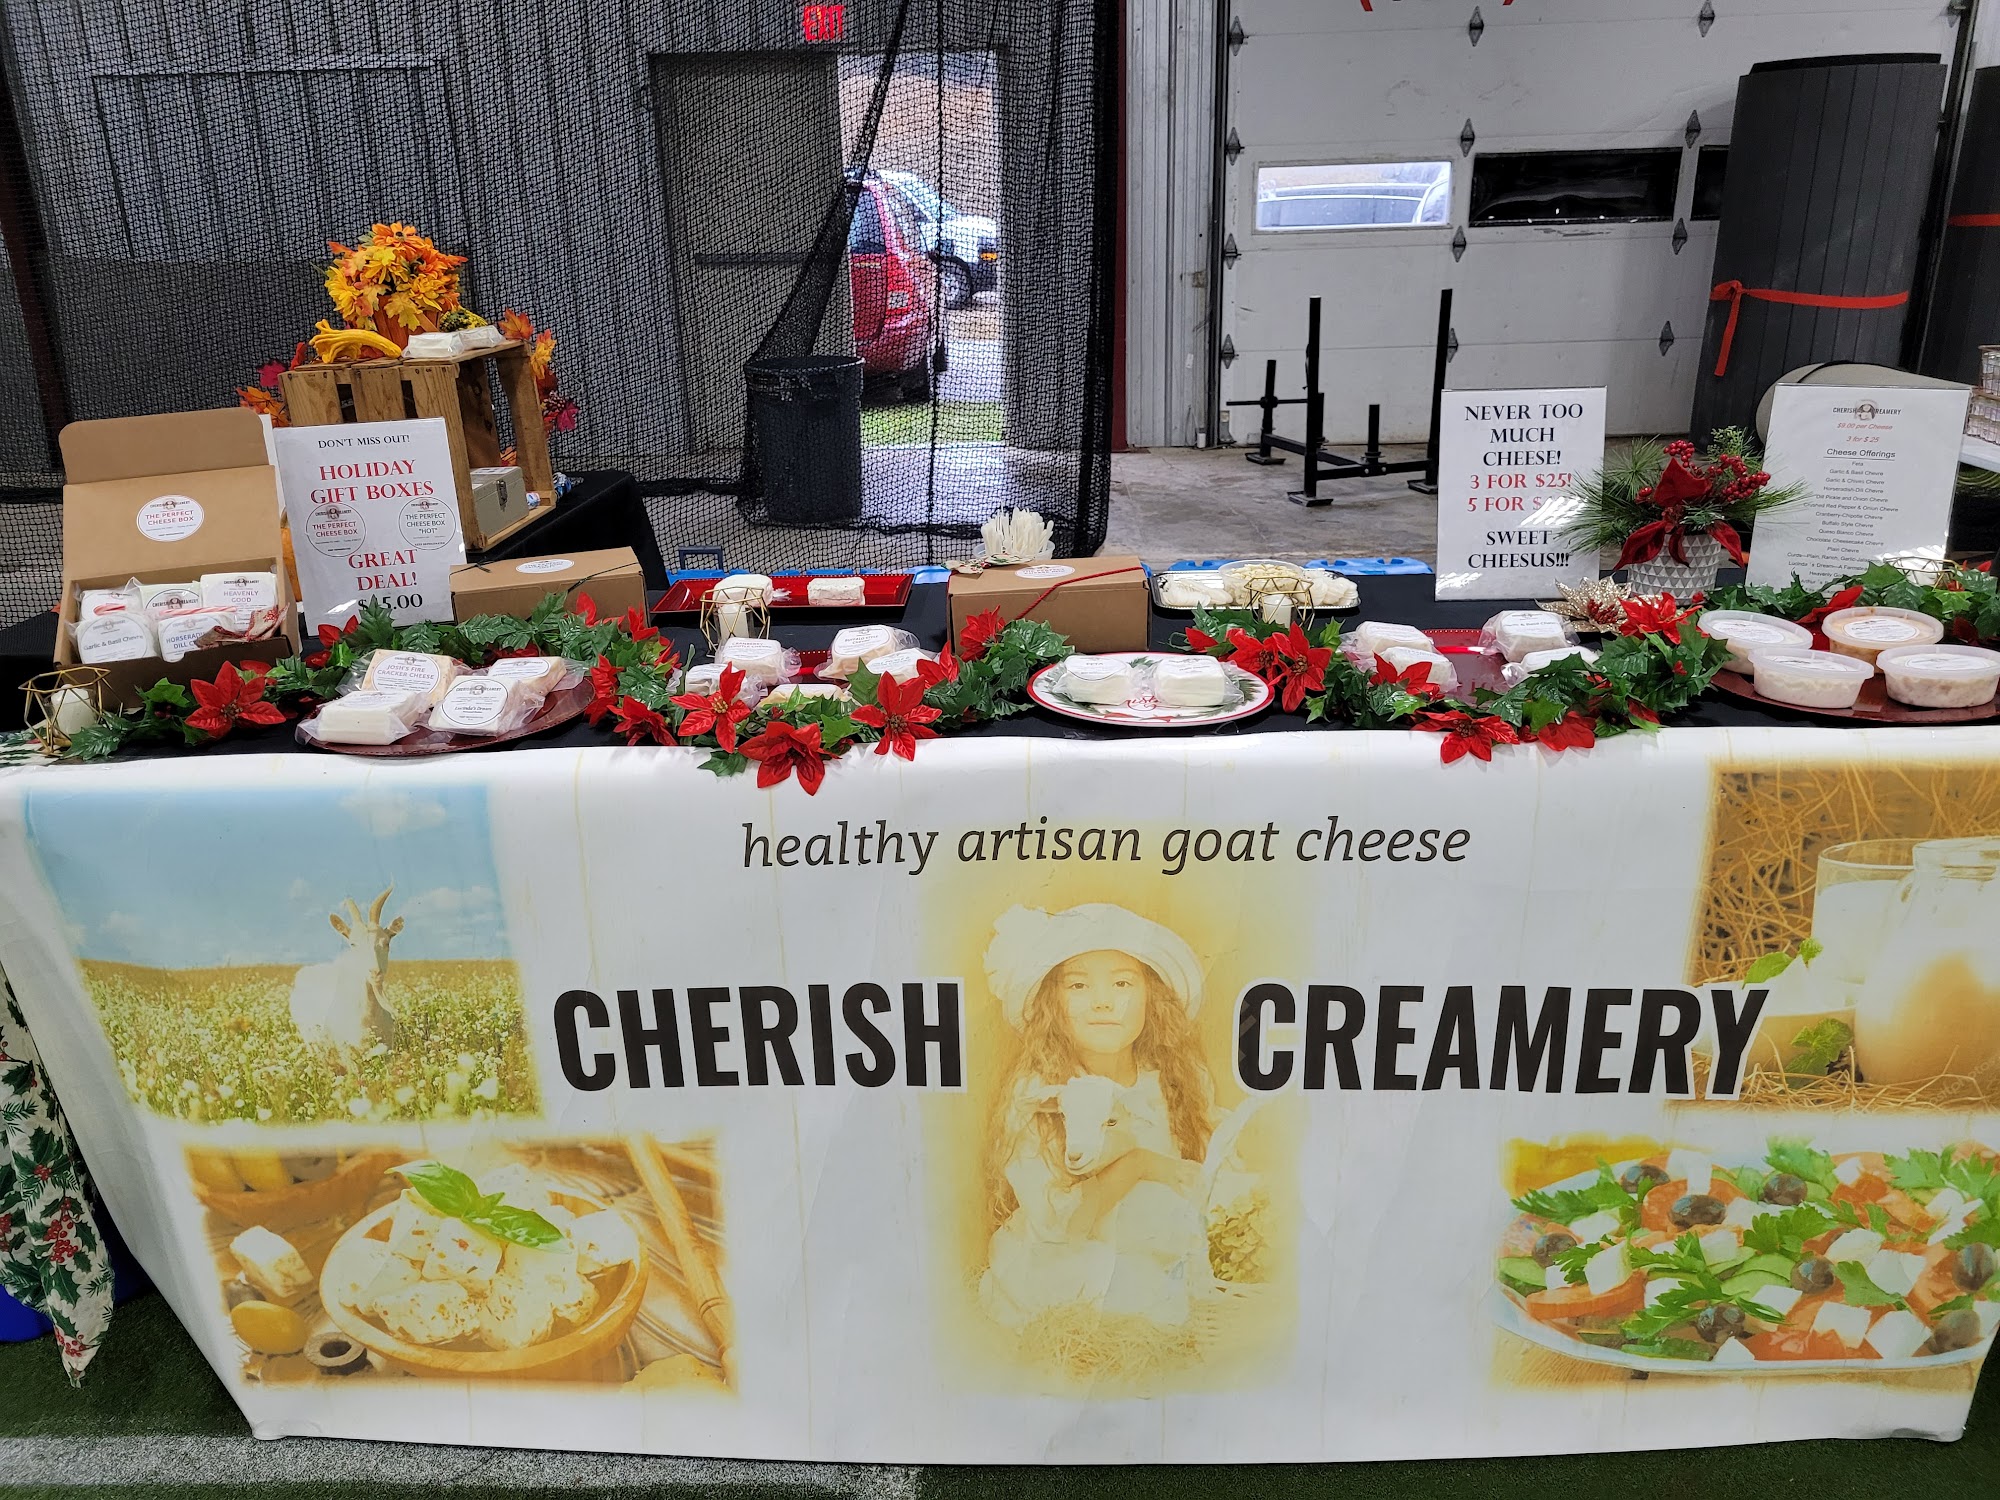 Cherish Creamery 2771 Paradise Rd #8621, Reynoldsville Pennsylvania 15851